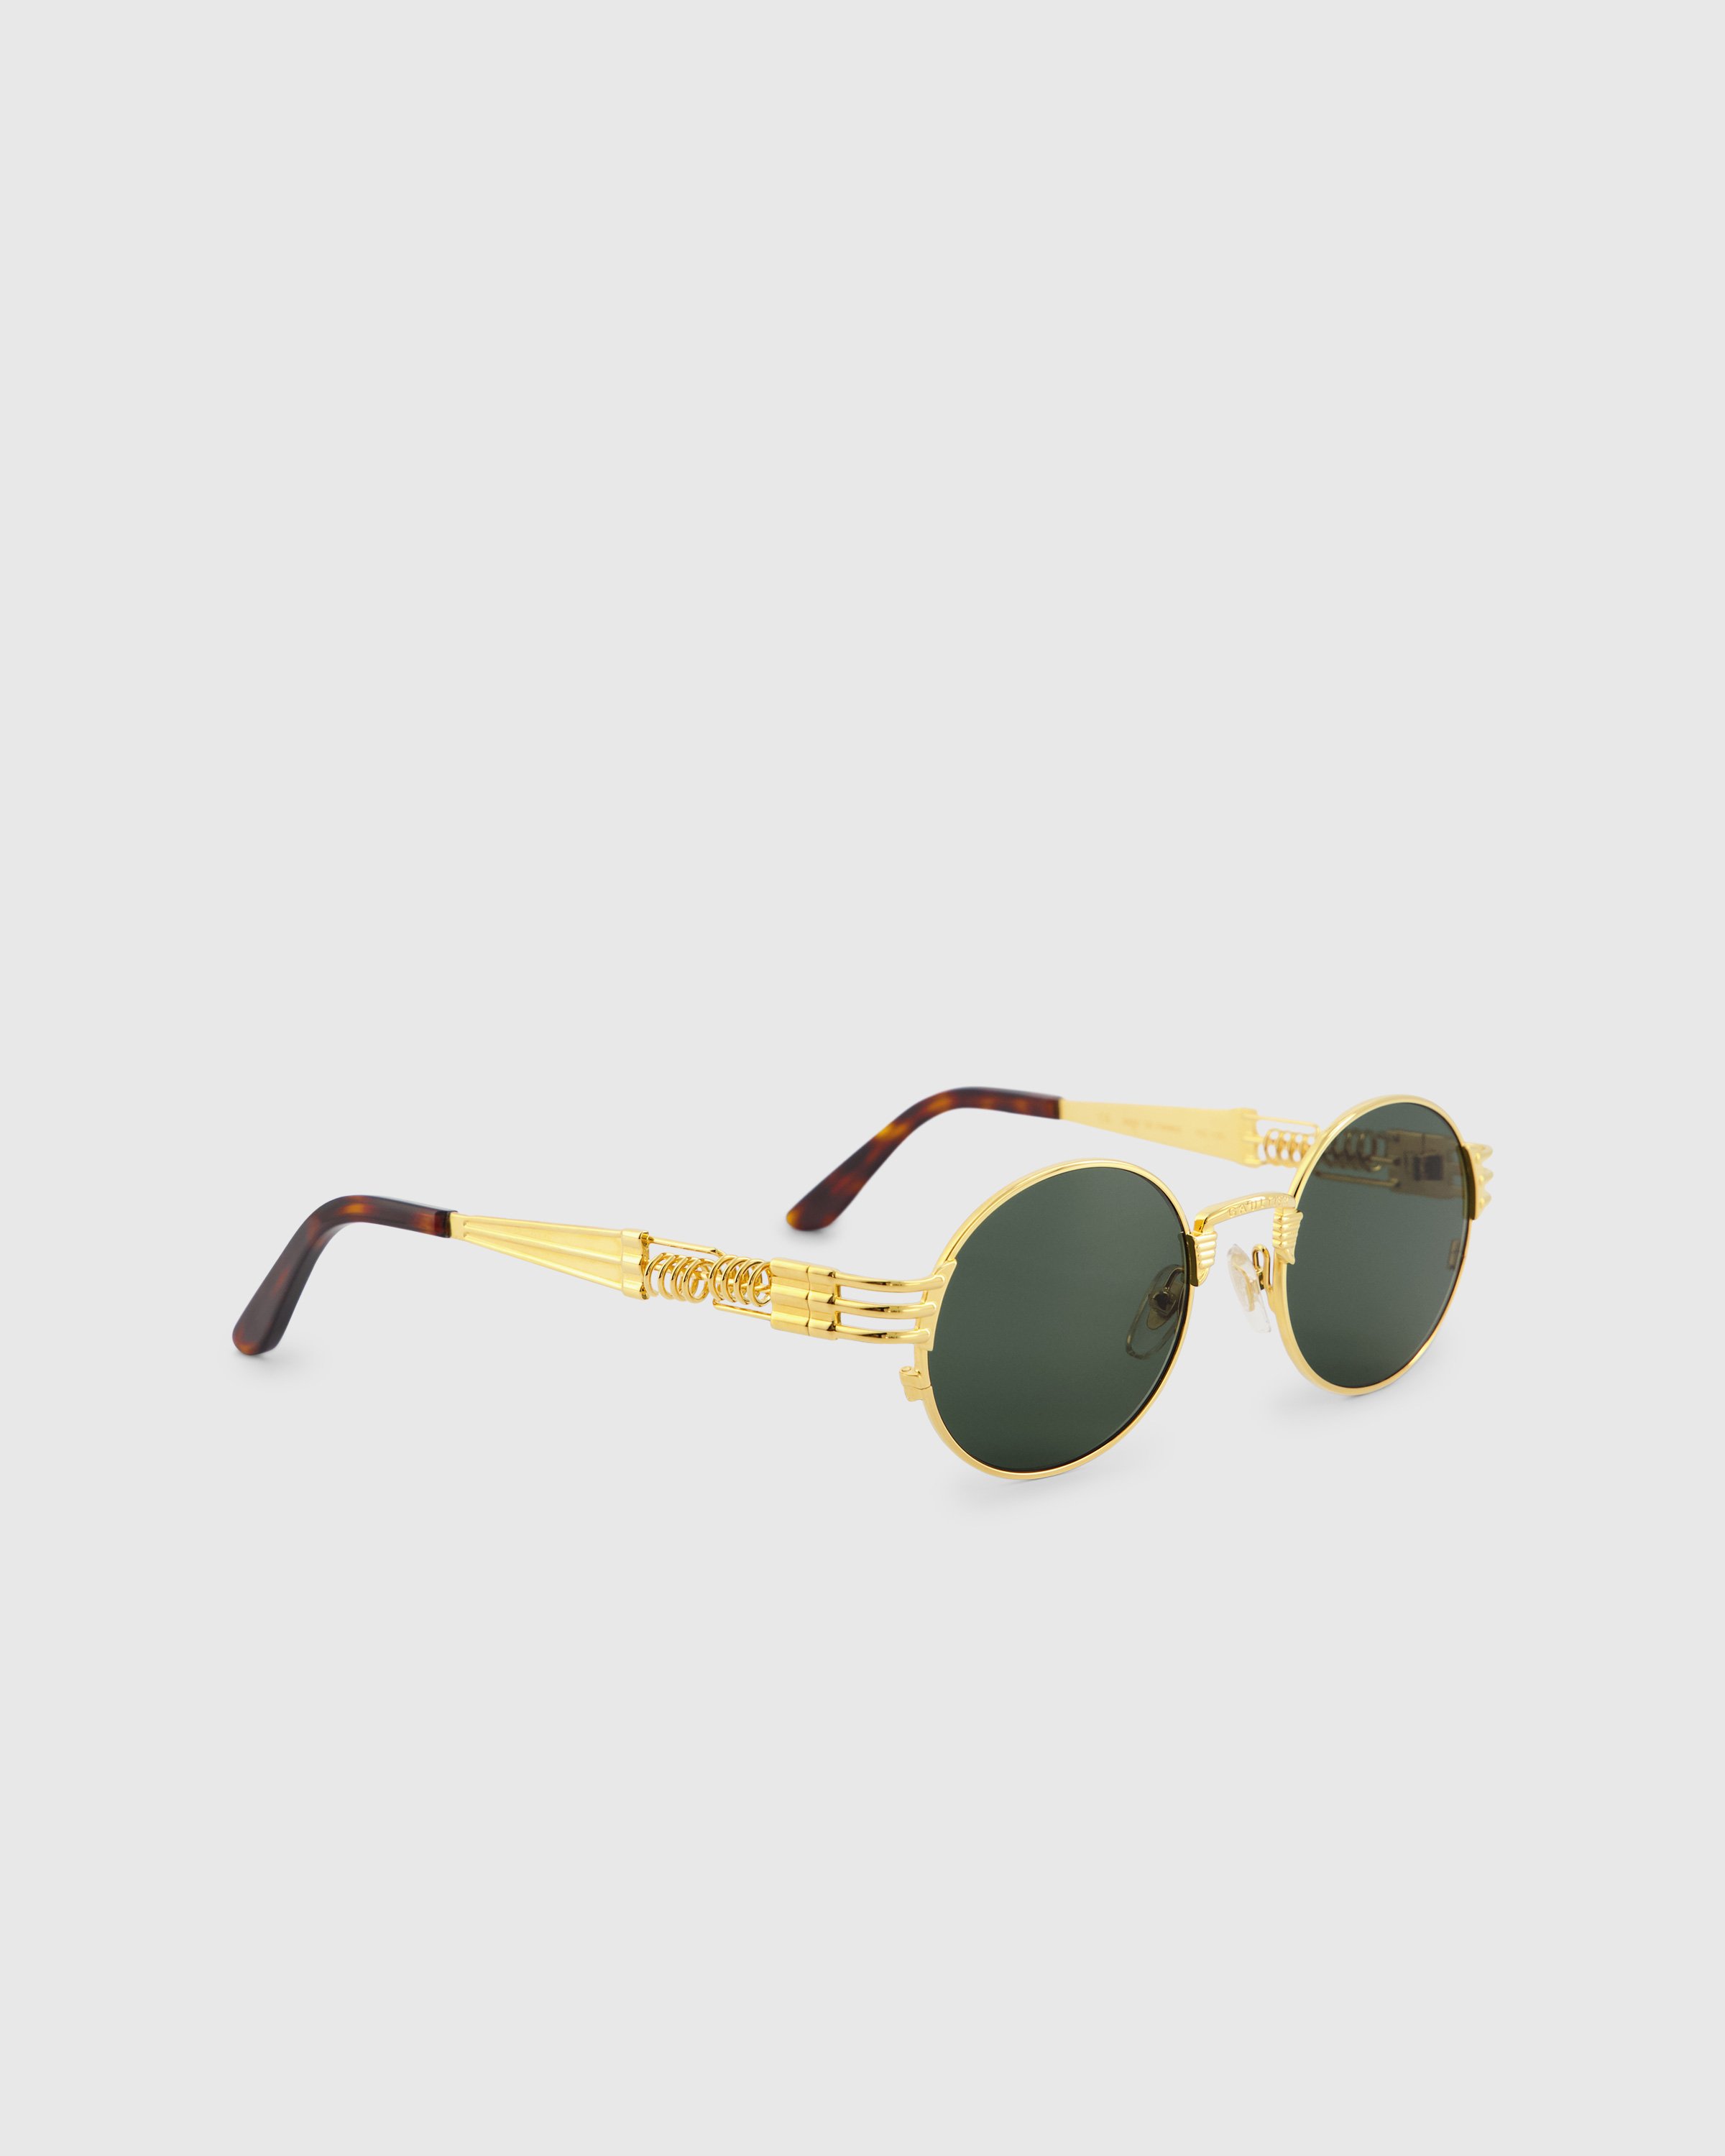 Jean Paul Gaultier x Burna Boy - 56-6106 Double Resort Sunglasses Yellow - Accessories - Yellow - Image 2